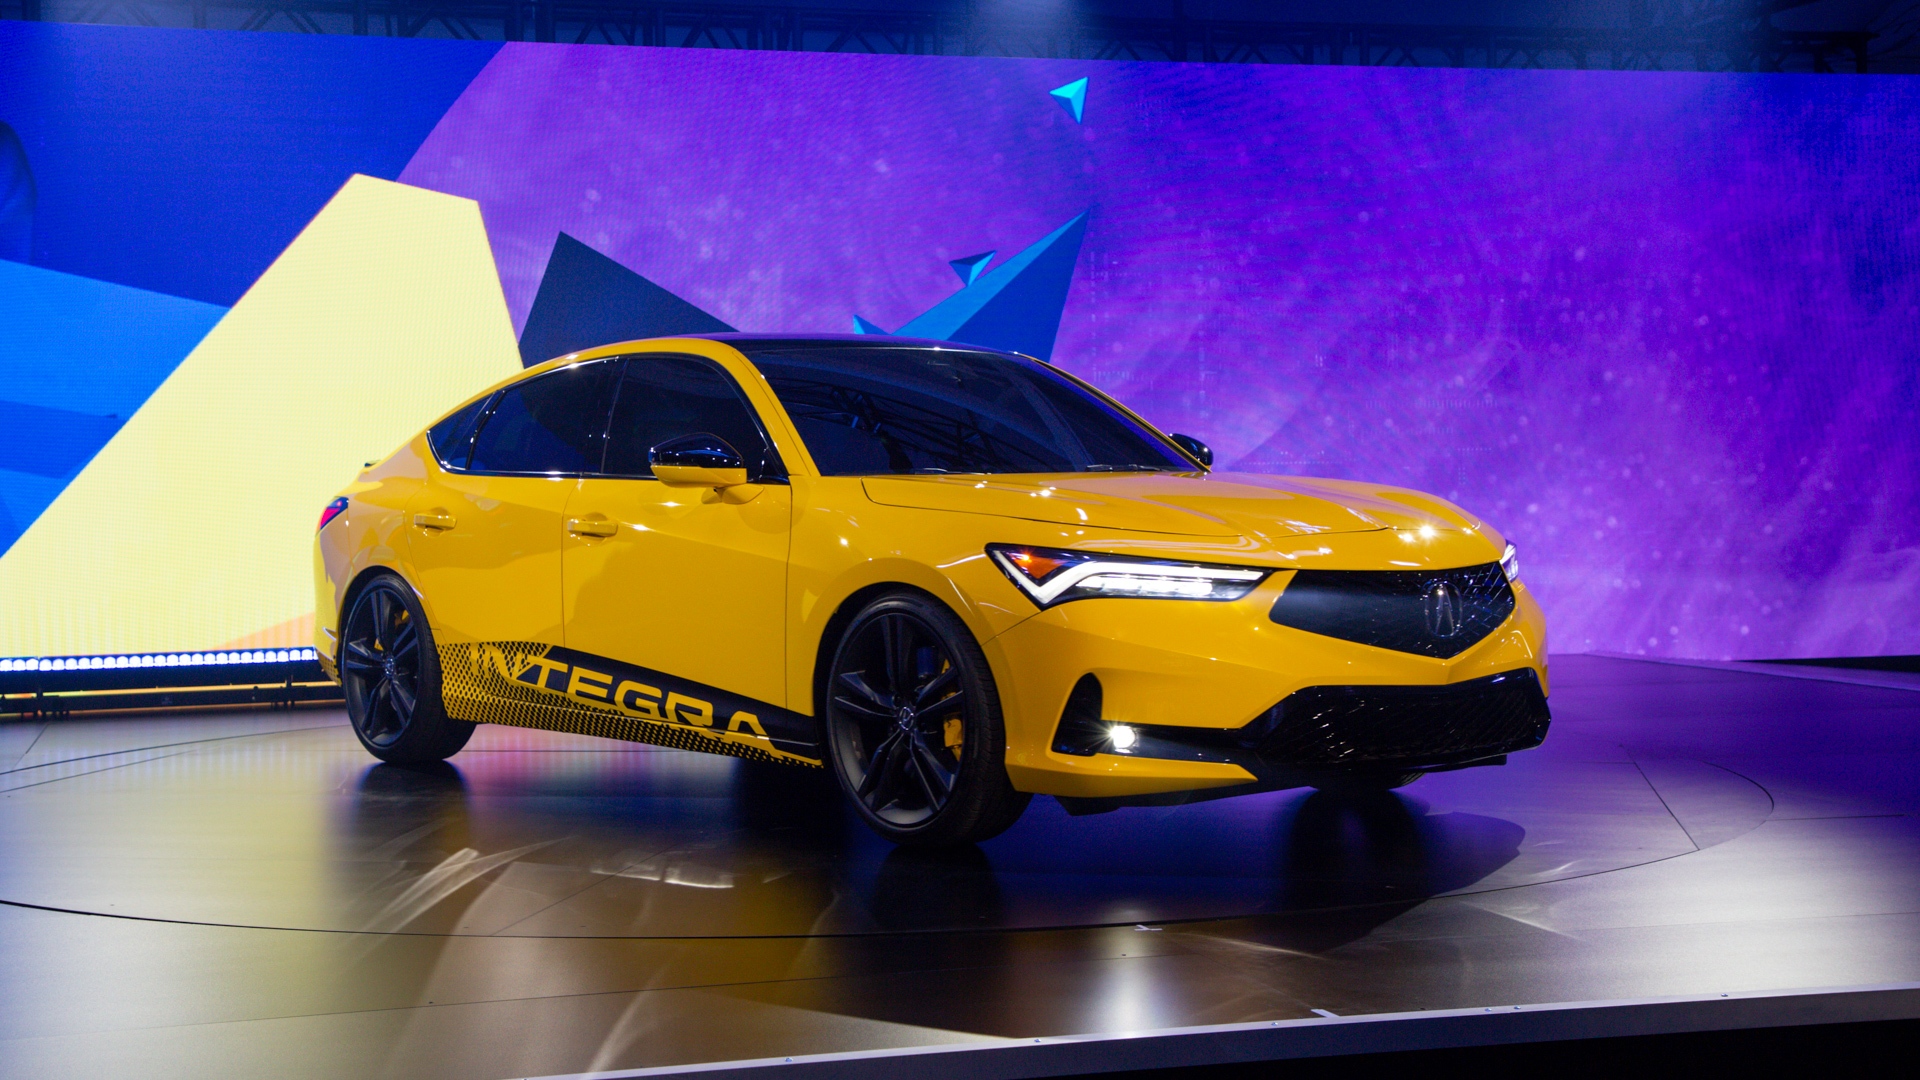 La production de l’Acura Integra débute en Ohio